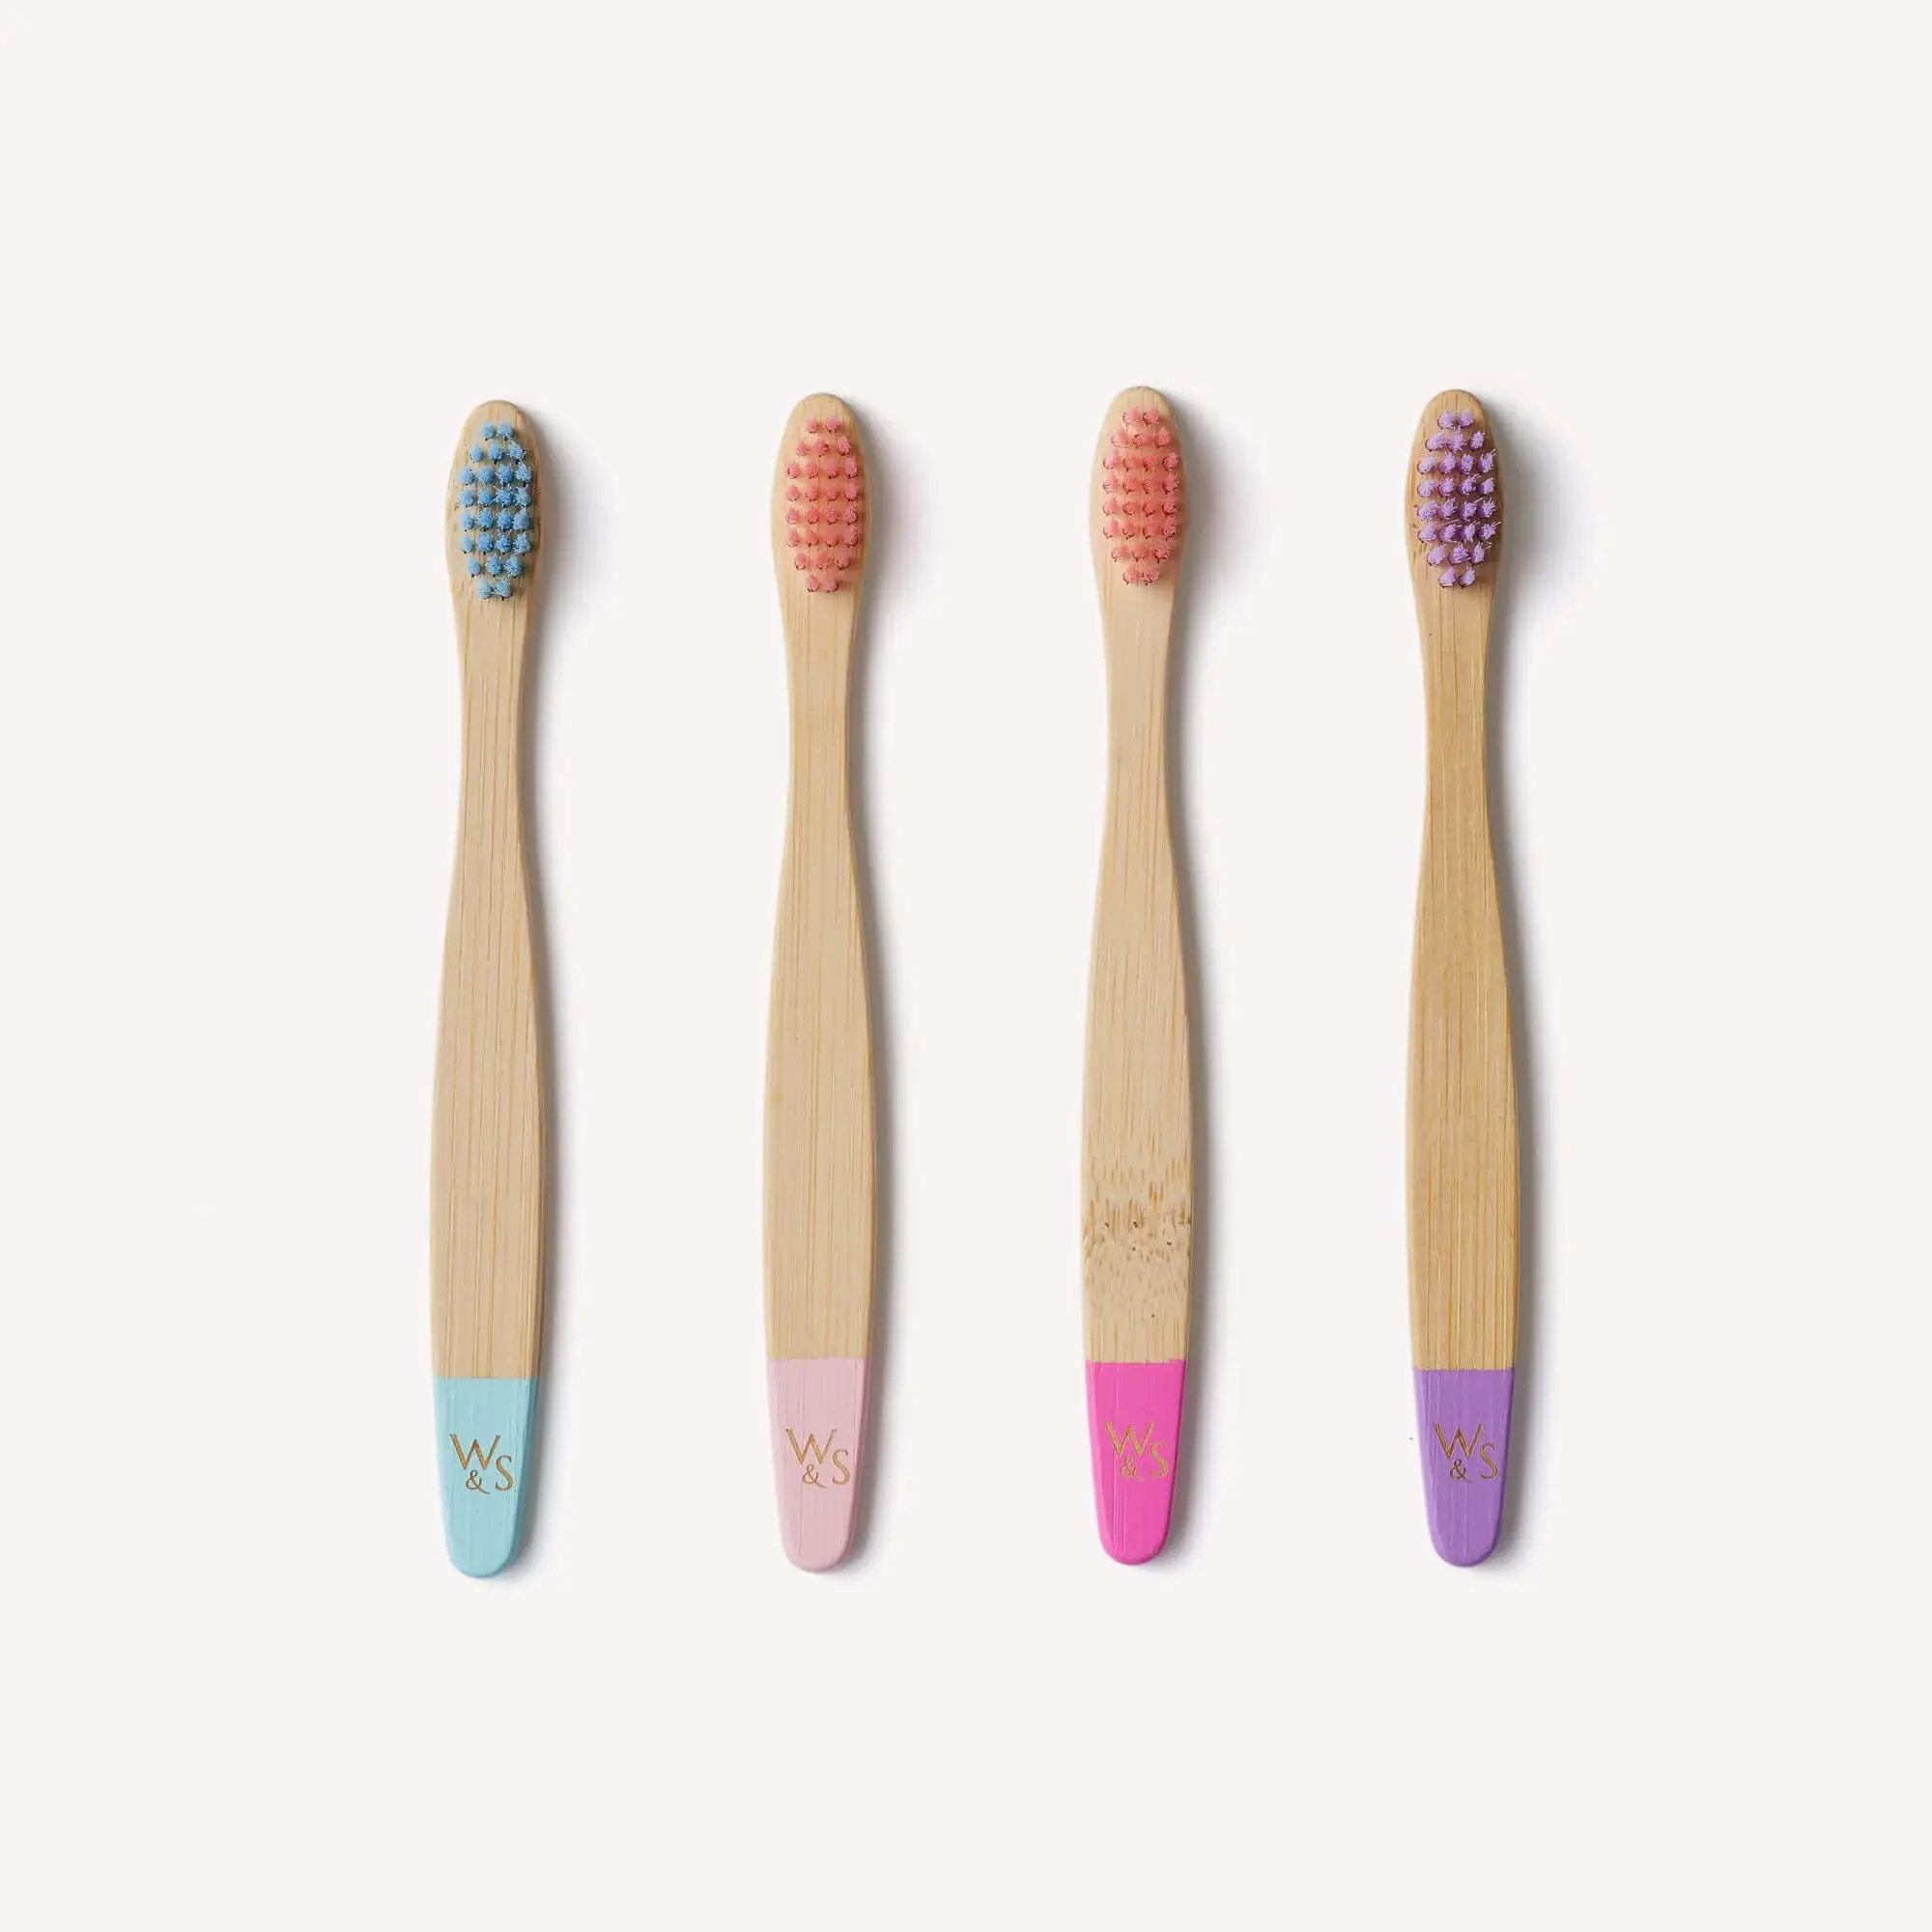 Ovely-cepillo de dientes de bambú con cerdas de colores suaves para niños pequeños